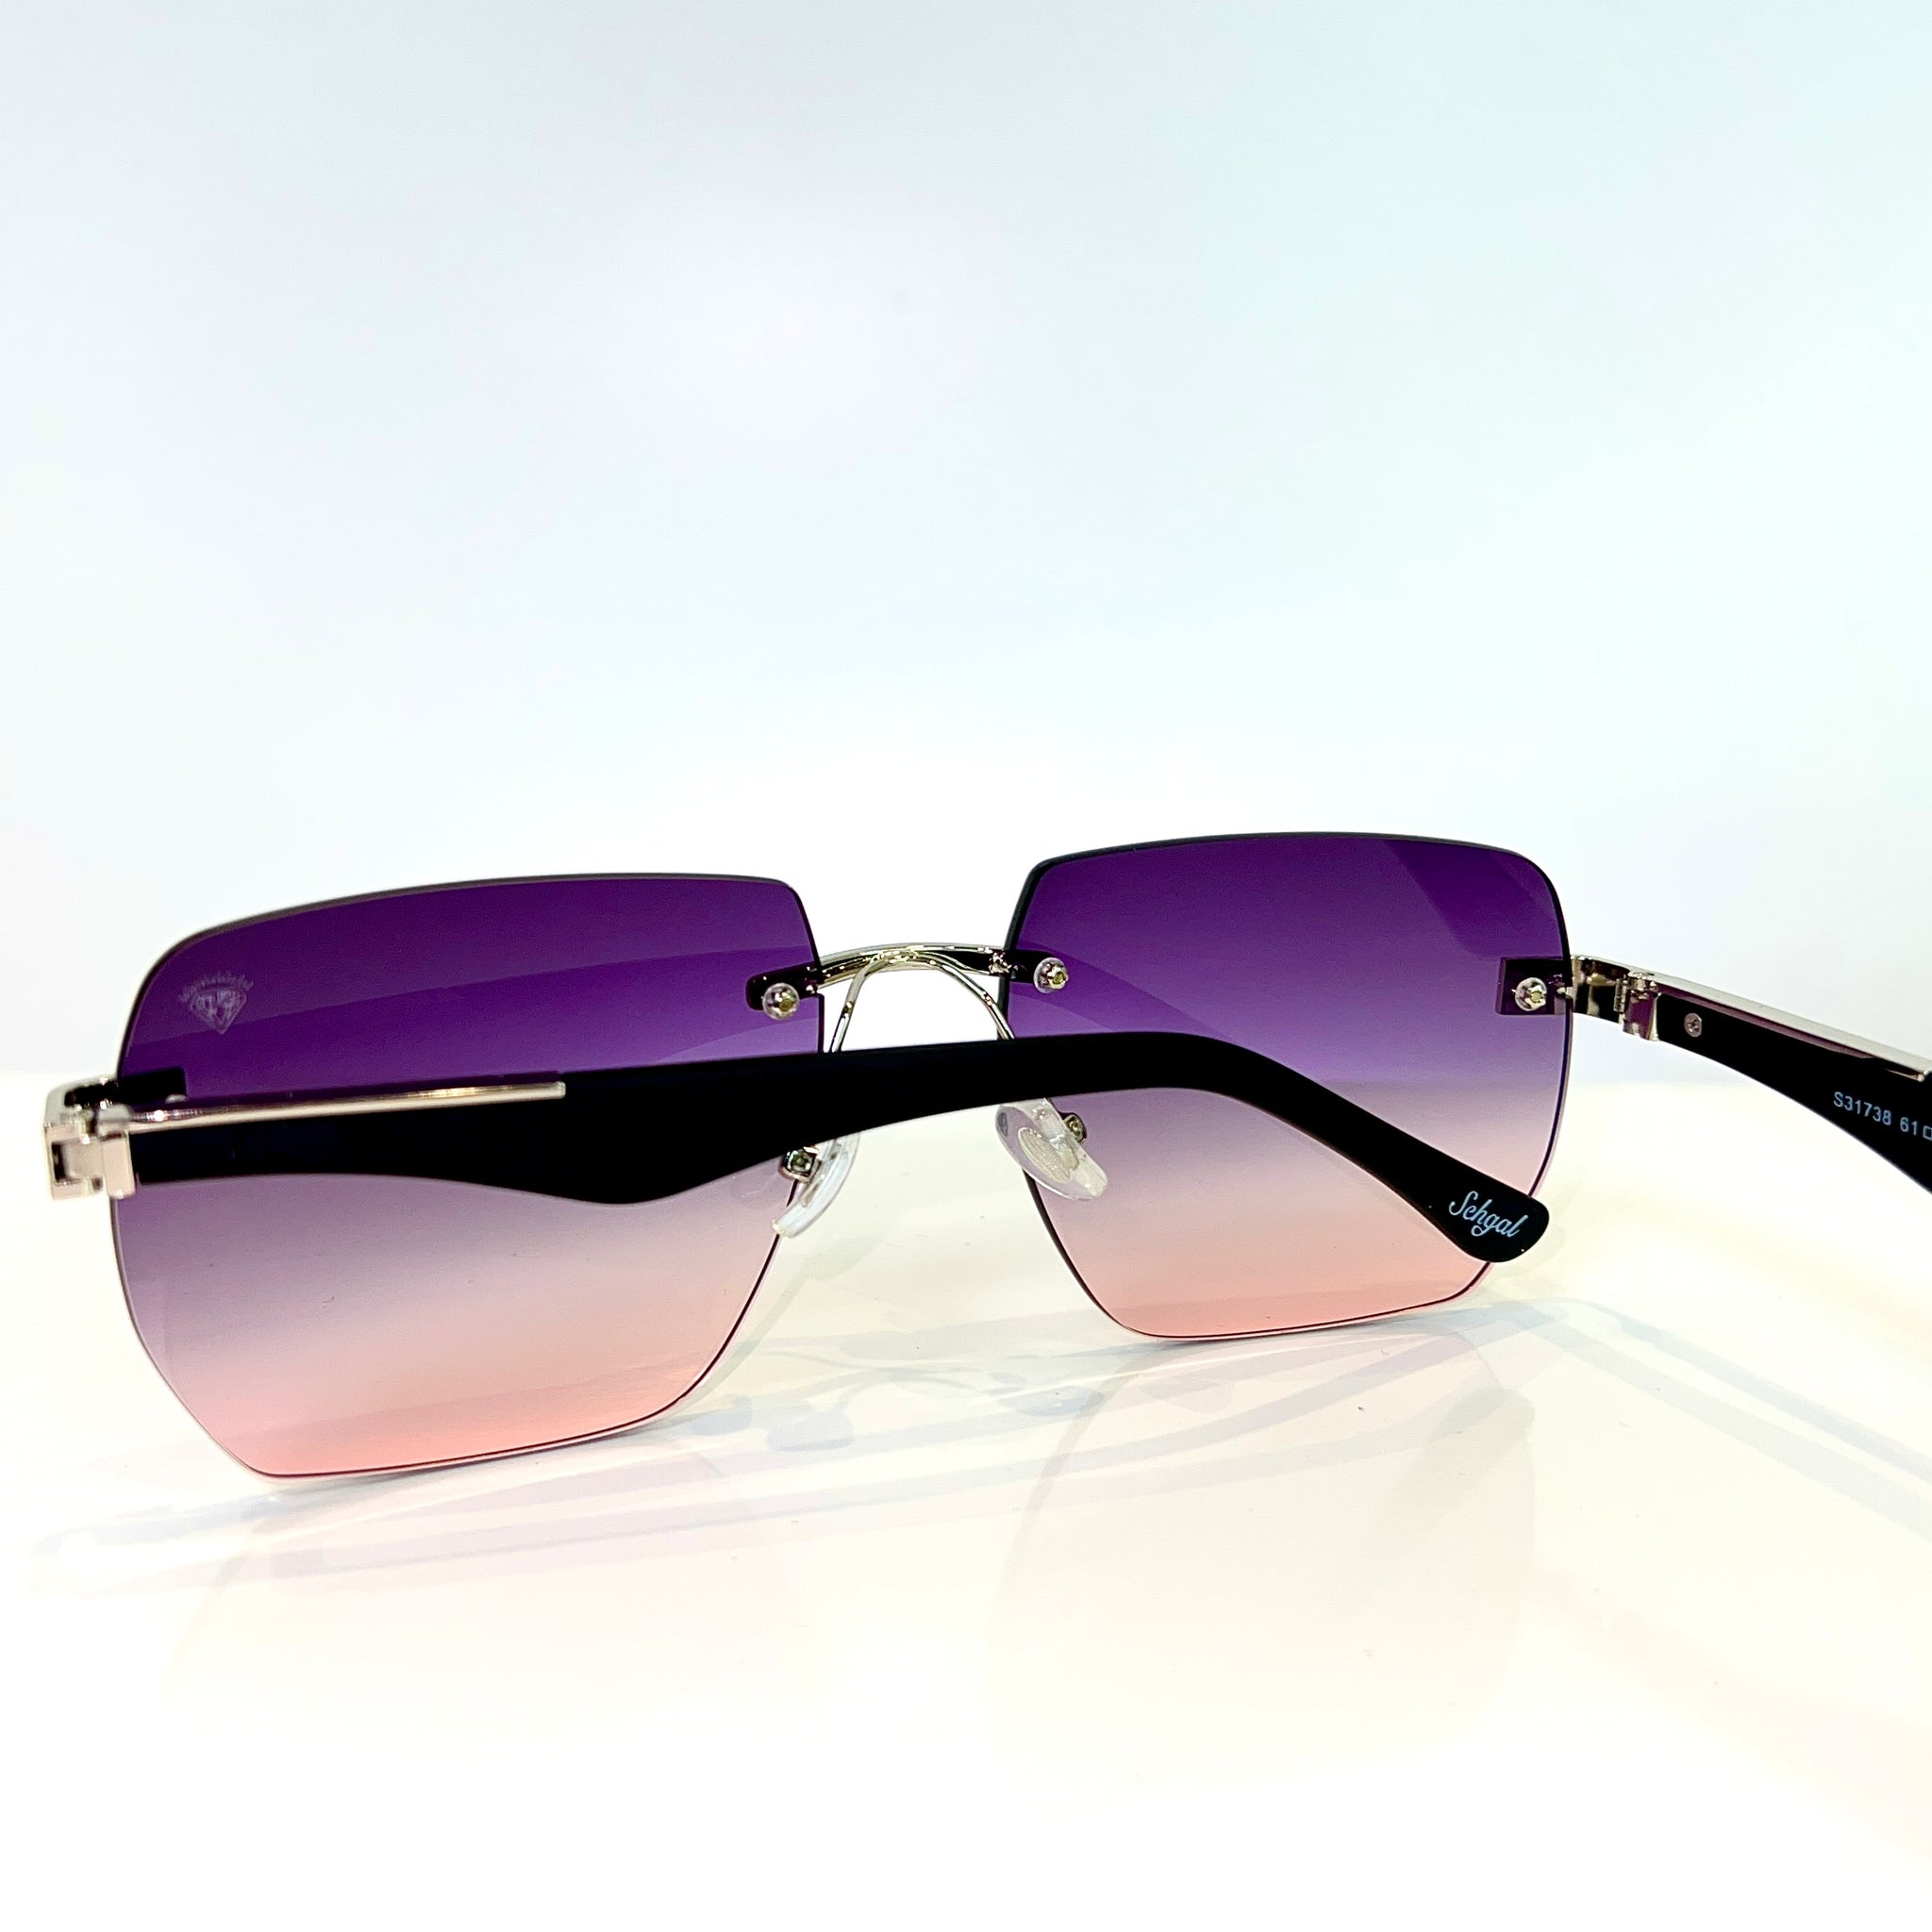 Dubai Glasses - 14 carat gold plated - Purple / Pink Shade